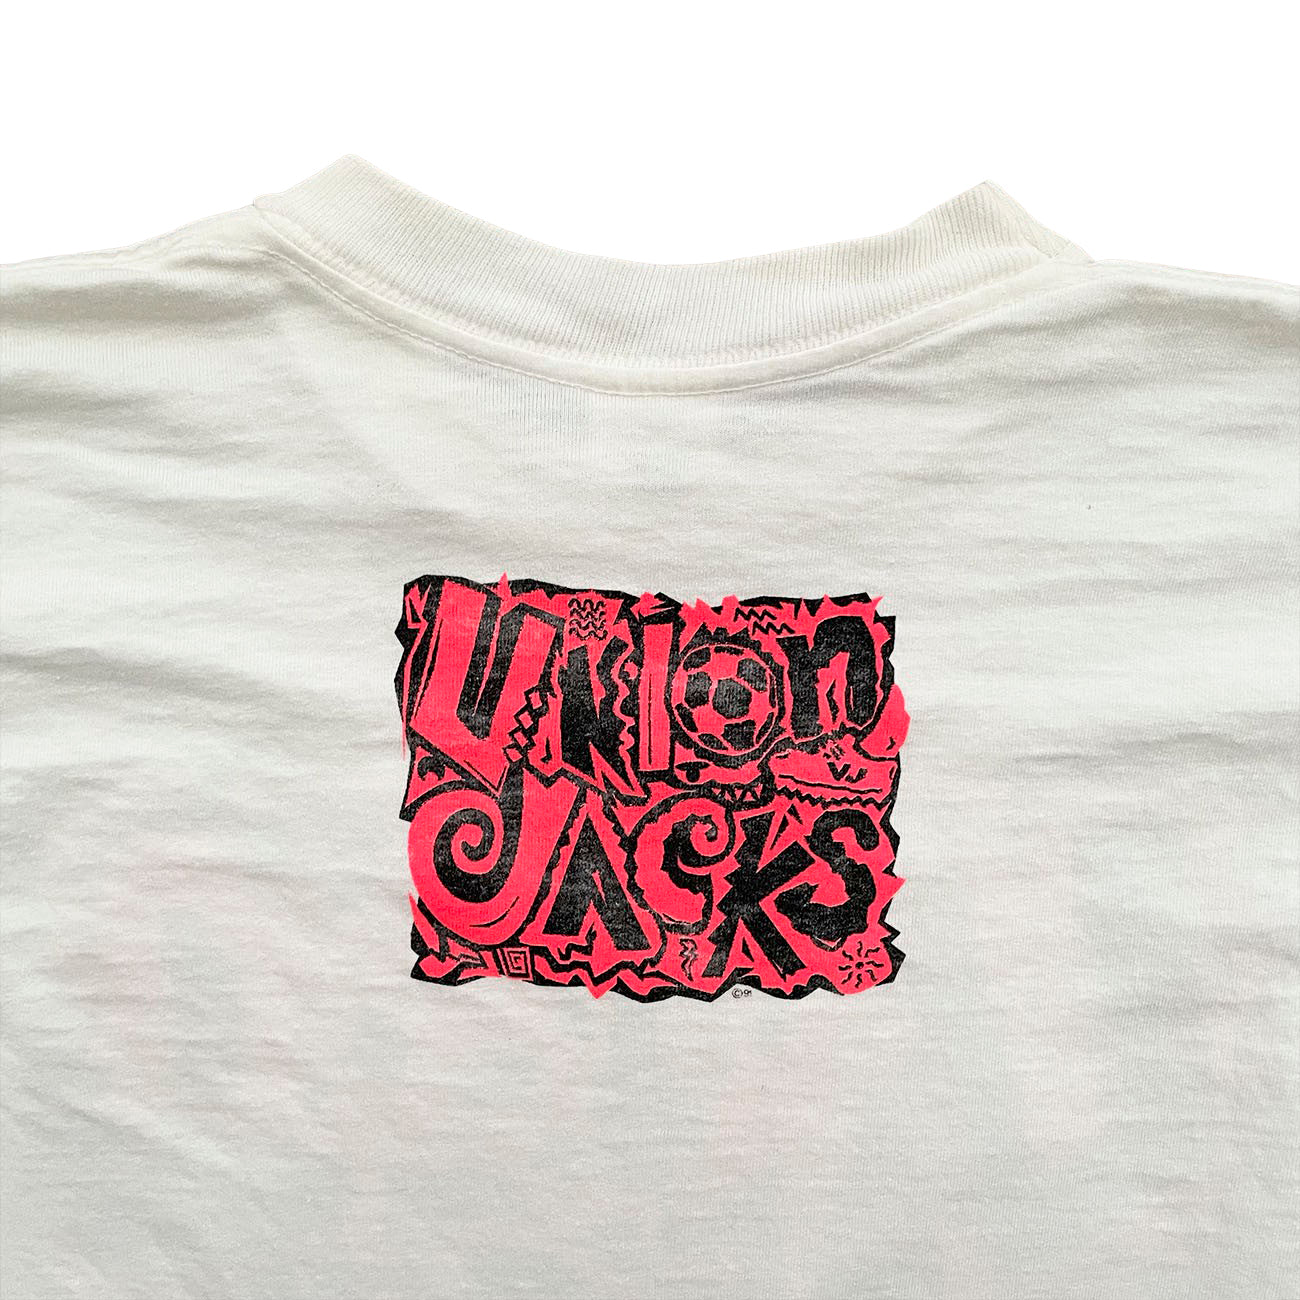 Union Jacks Neon Graphic T-Shirt - S